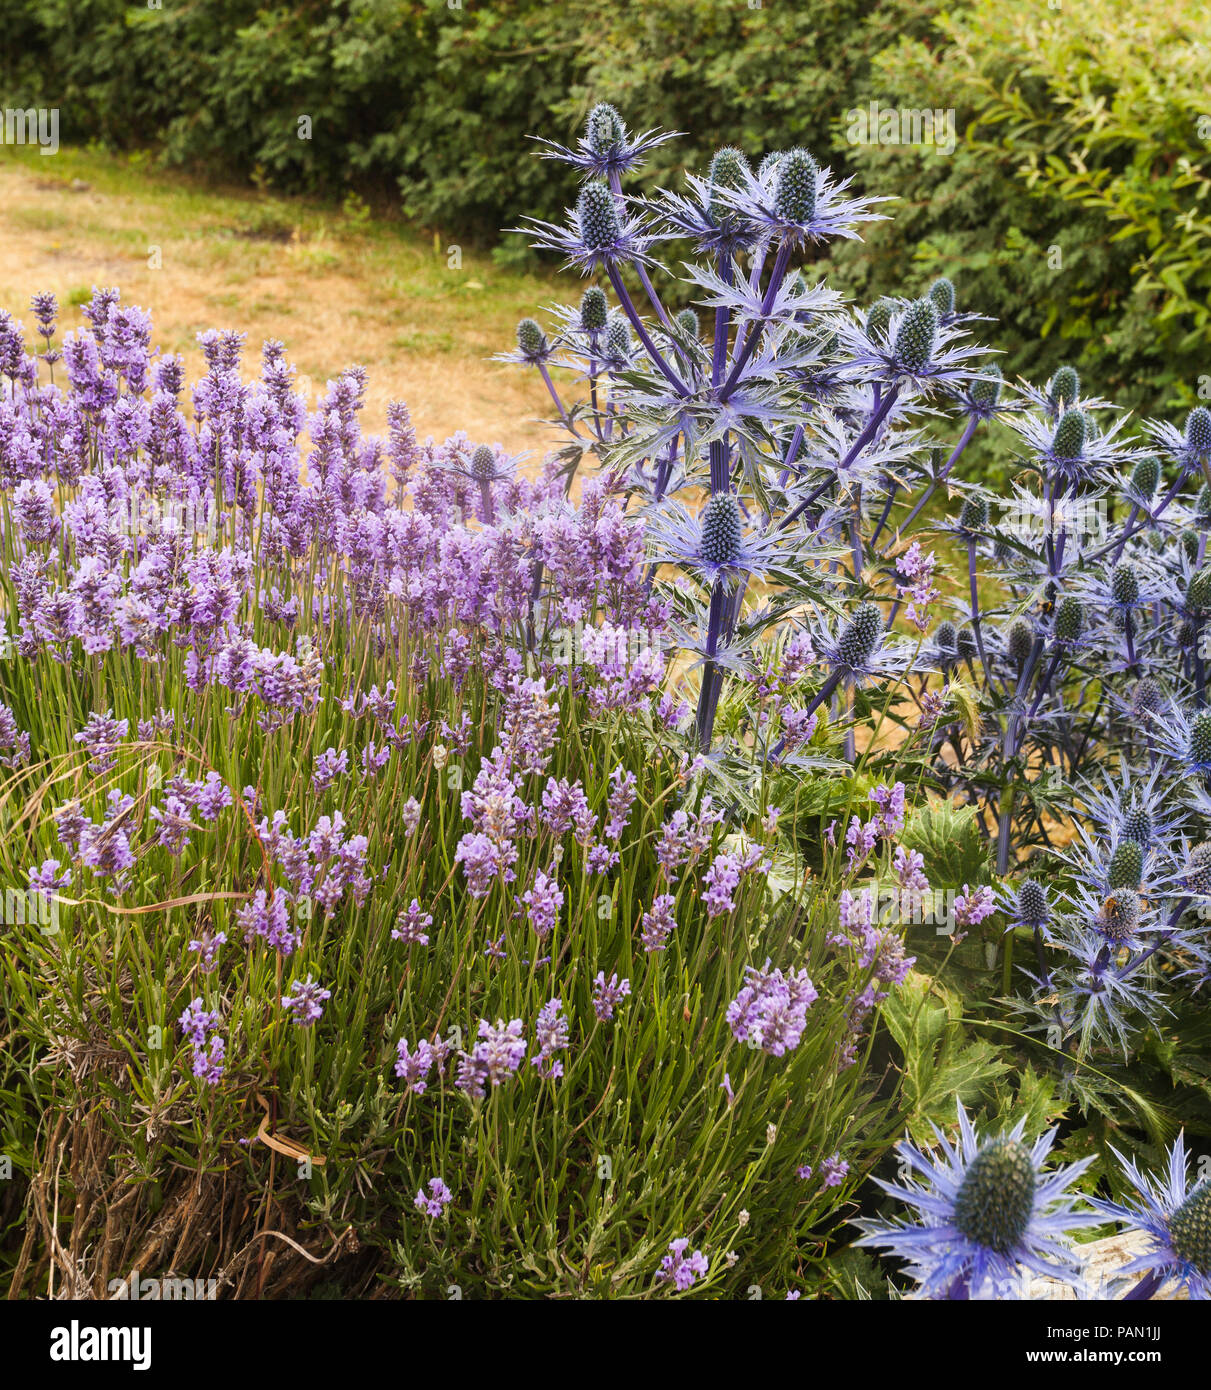 Eryngium Picos blue flowers at Alnmouth,Northumberland,England,UK Stock Photo